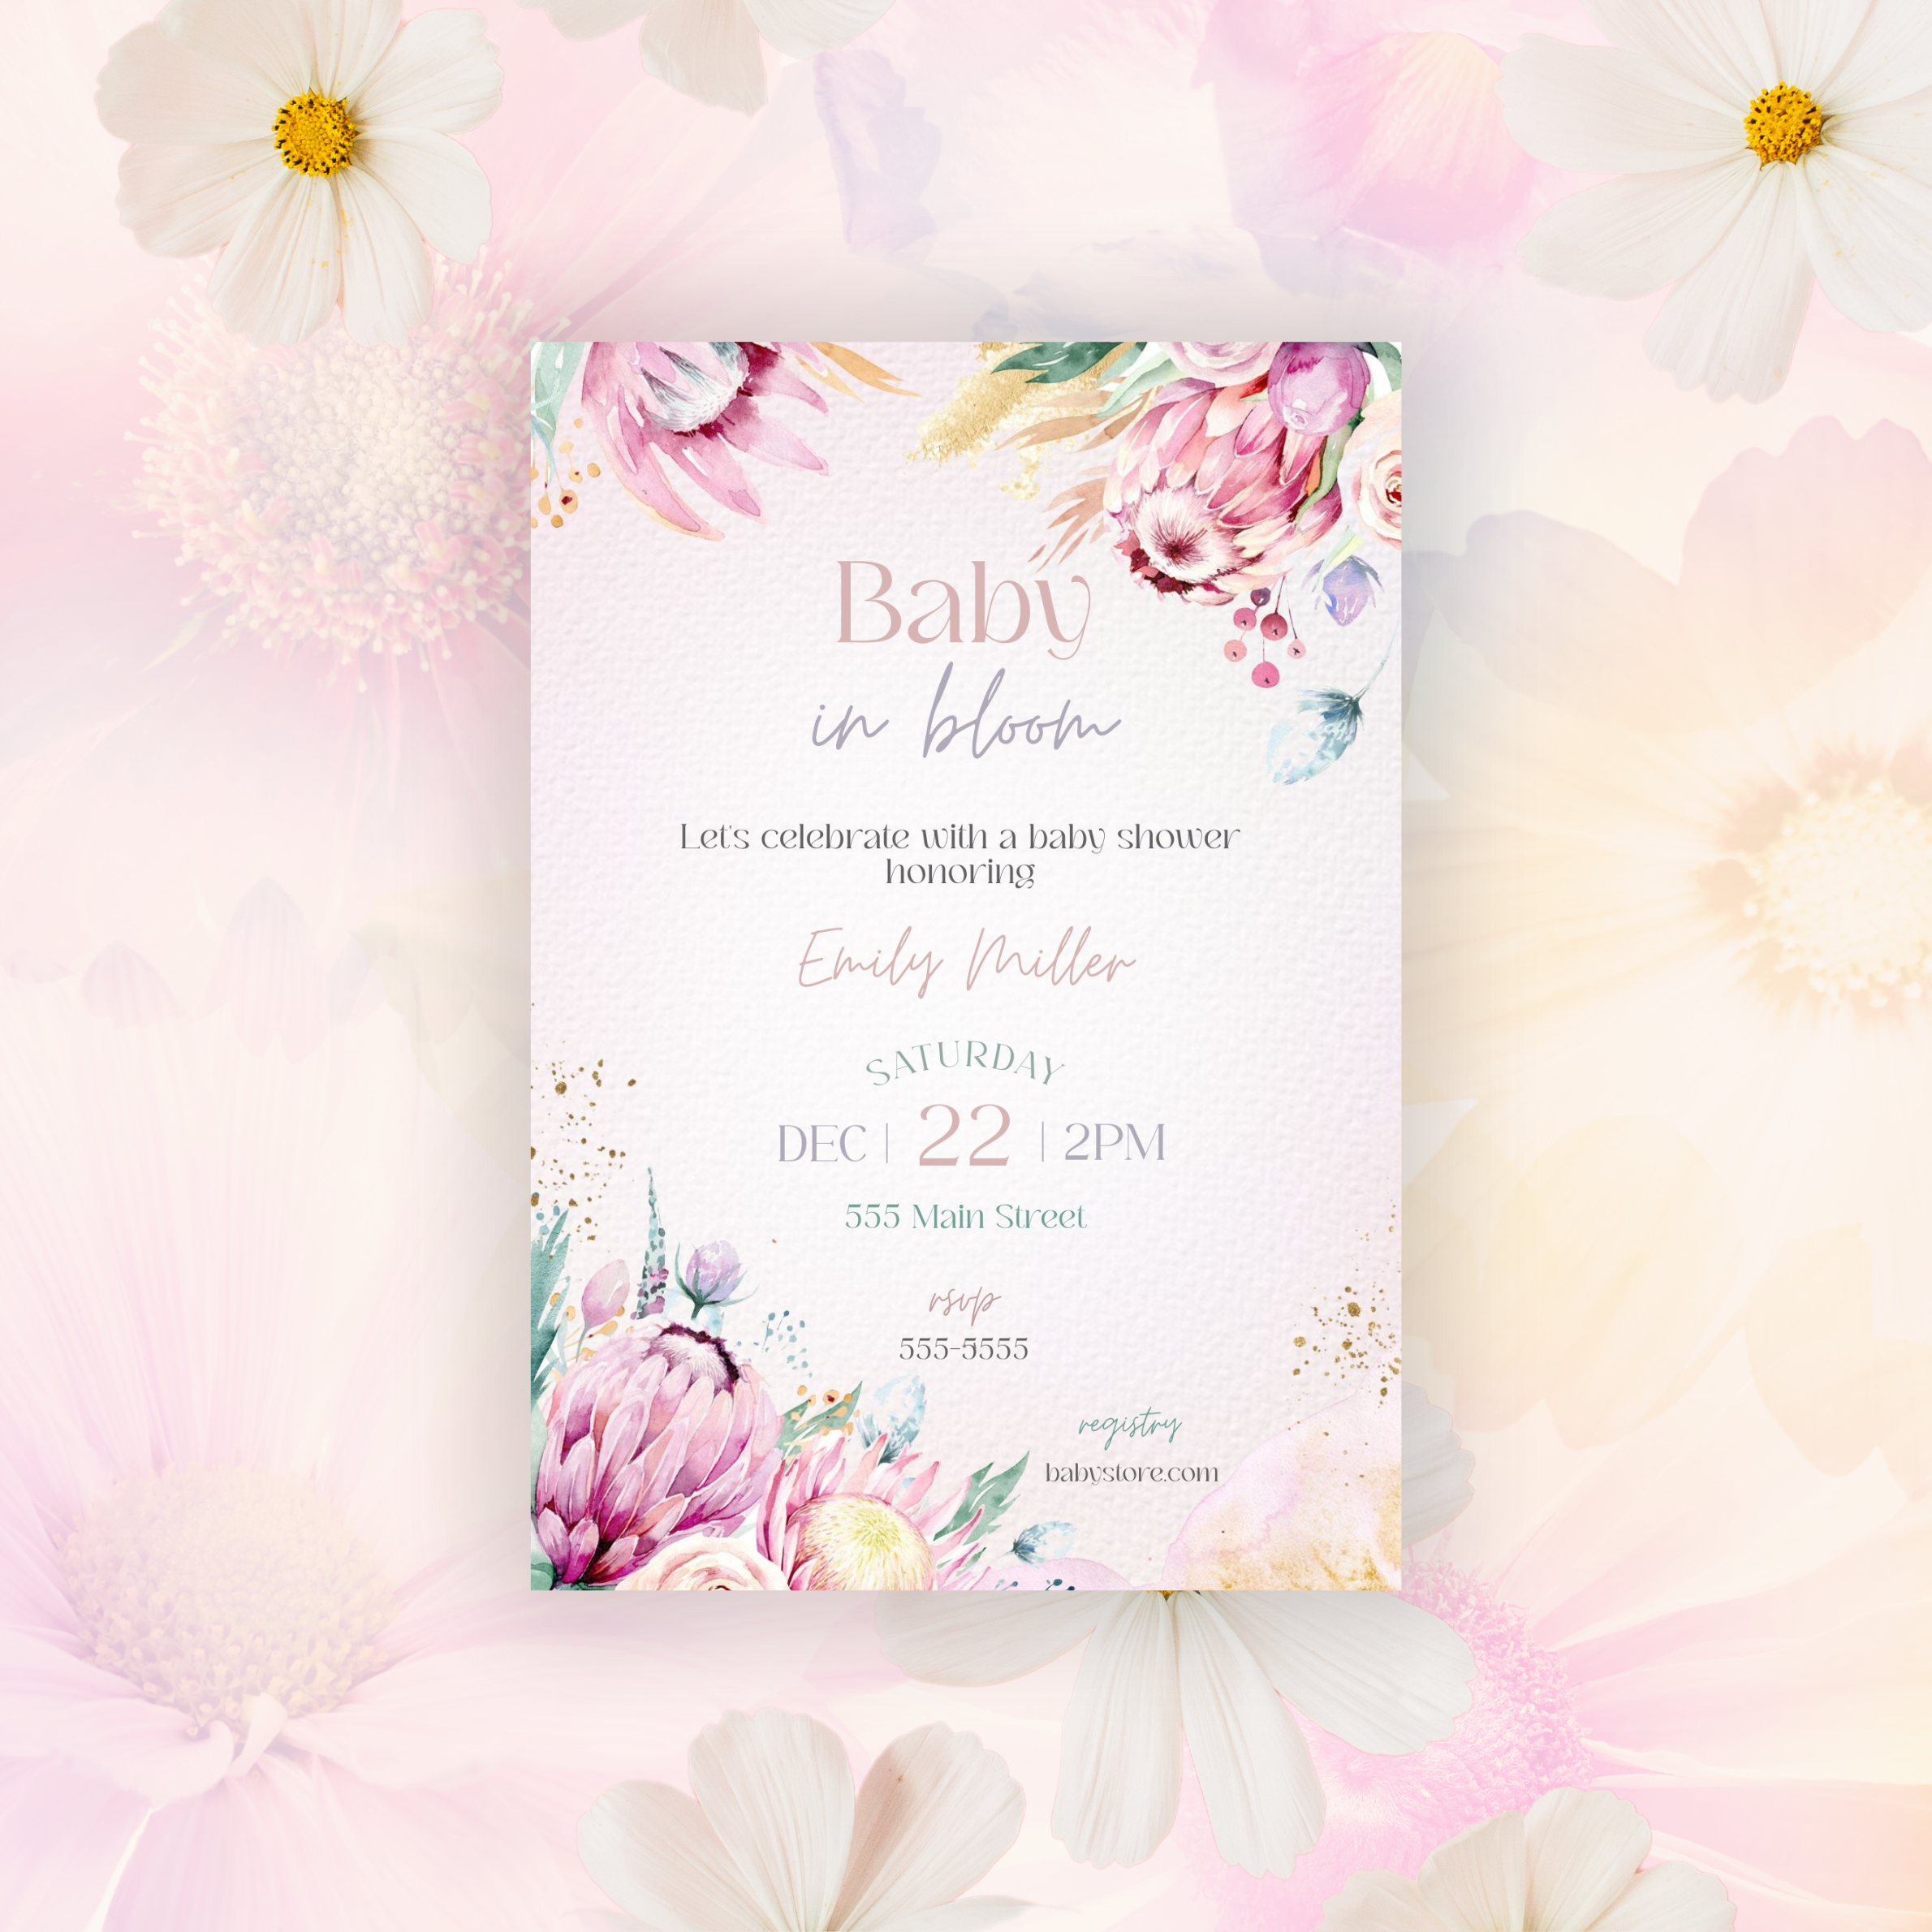 Baby in bloom baby shower invitation